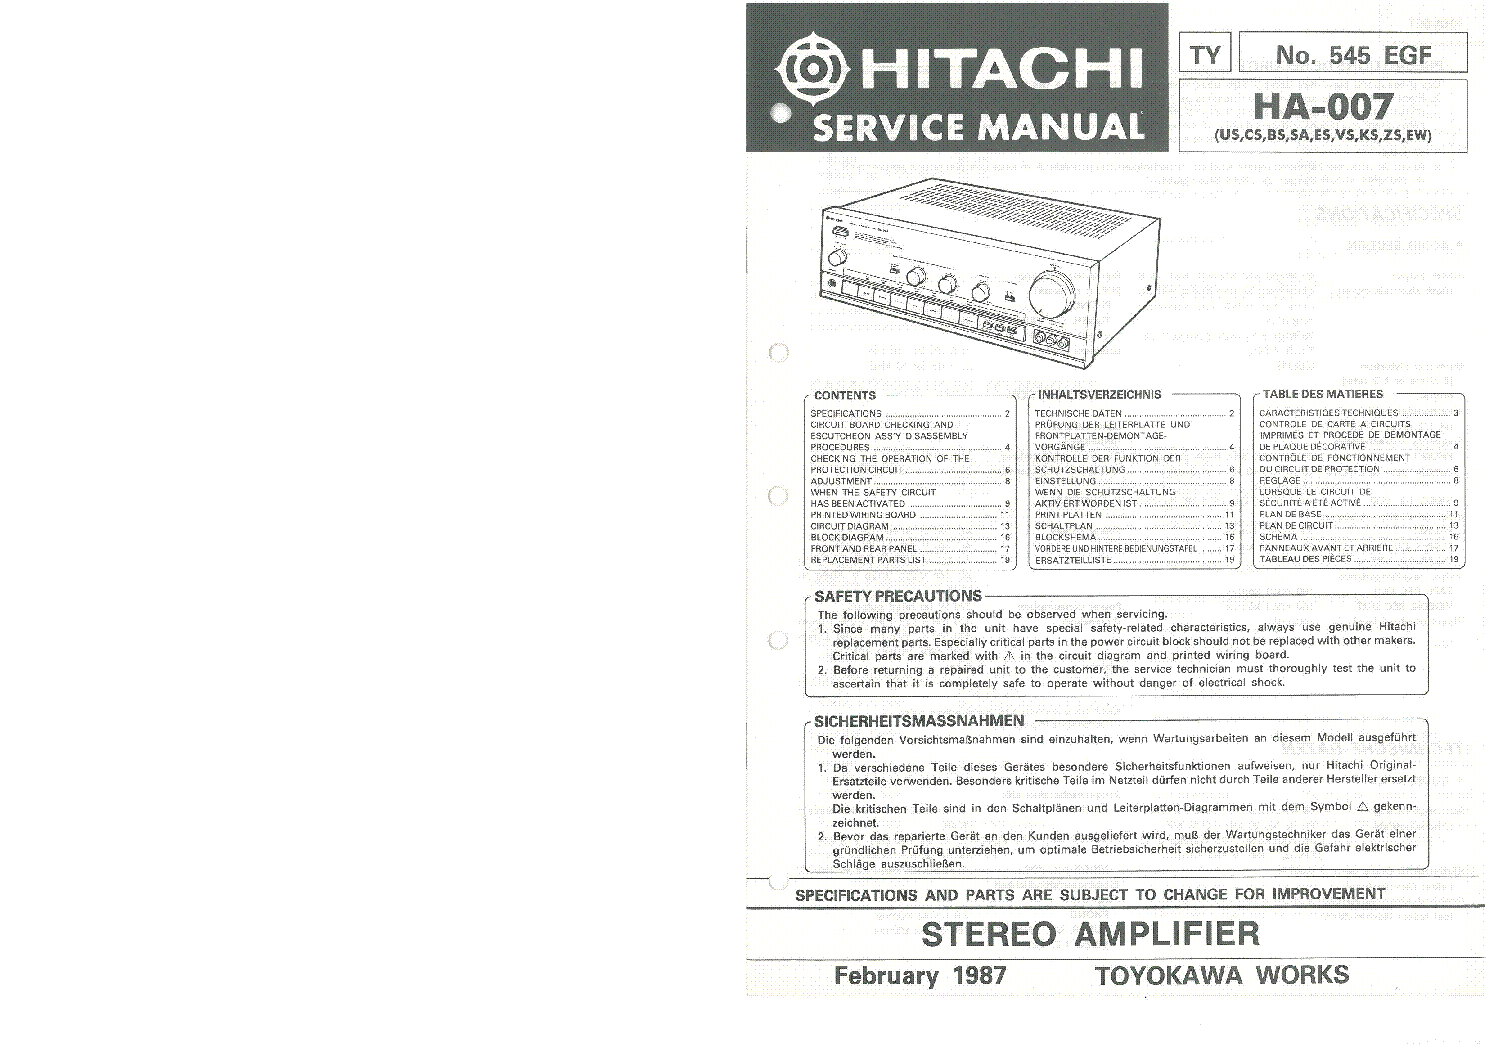 HITACHI HA 007 service manual (1st page)